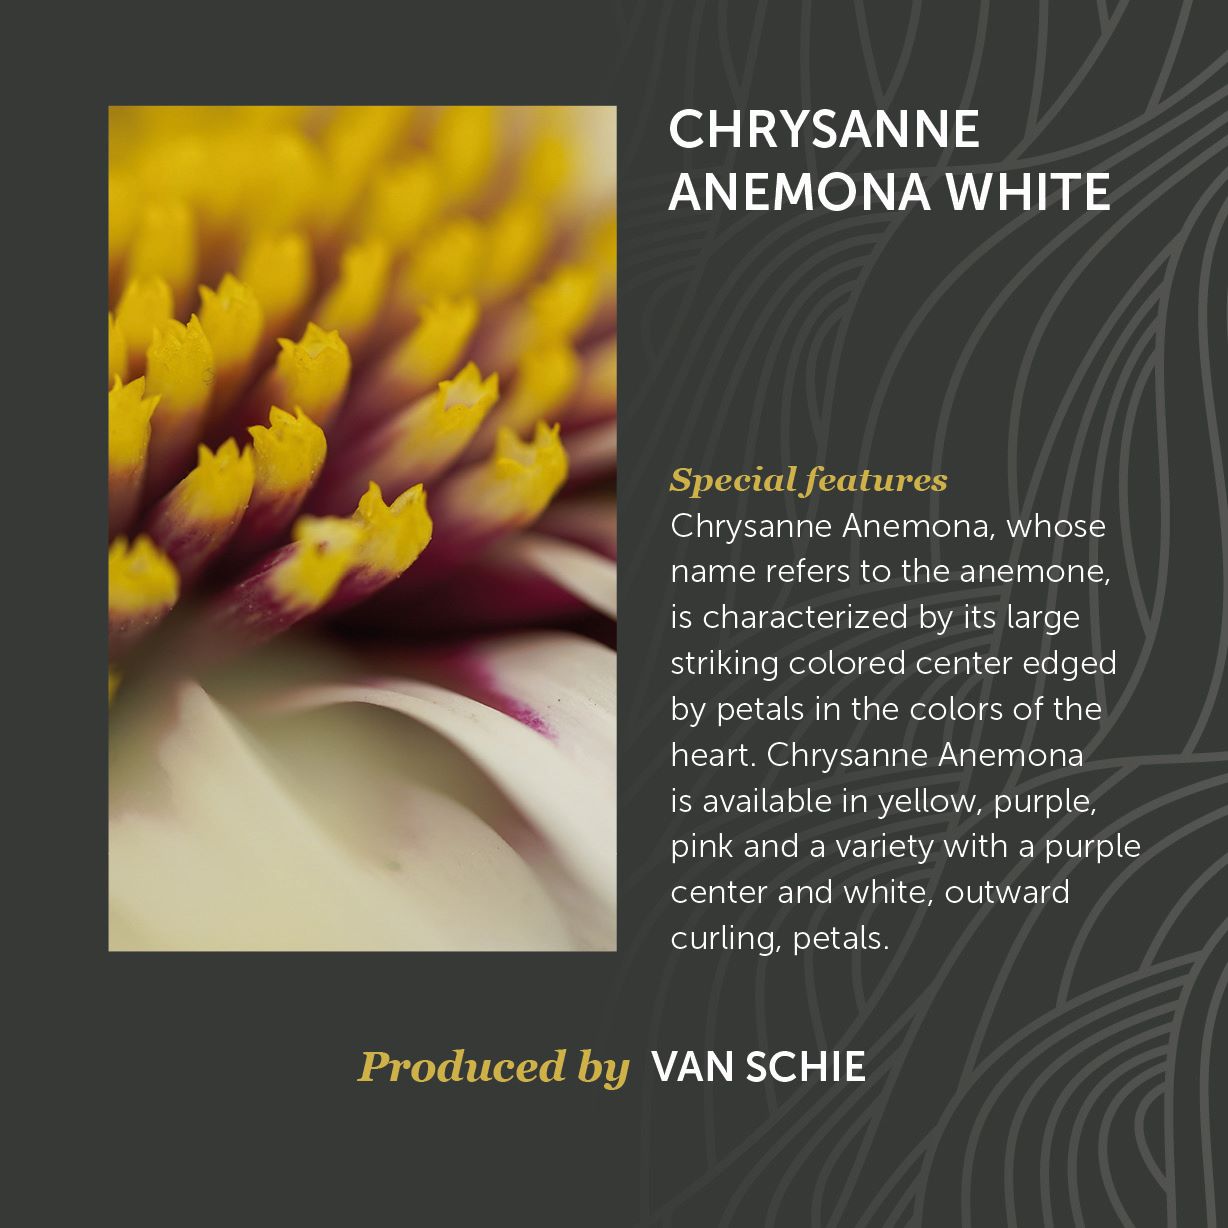 Chrysanne Anemone White